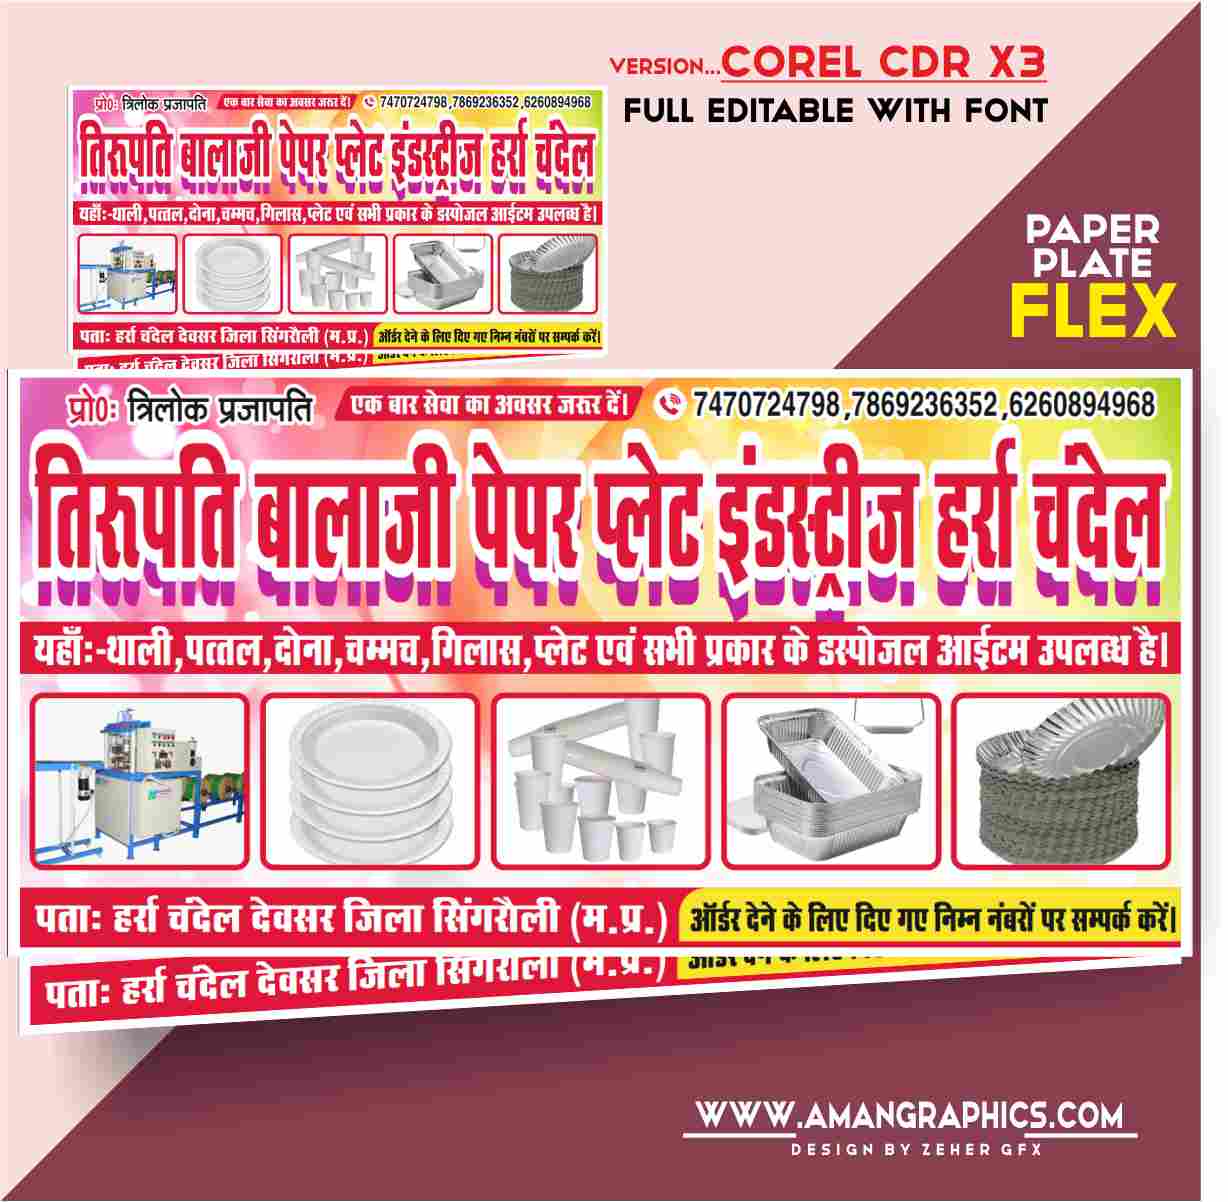 Tirupati Balaji Paper Plate industries Disposable Store Banner Design Cdr File FLEX BANNER FLEX